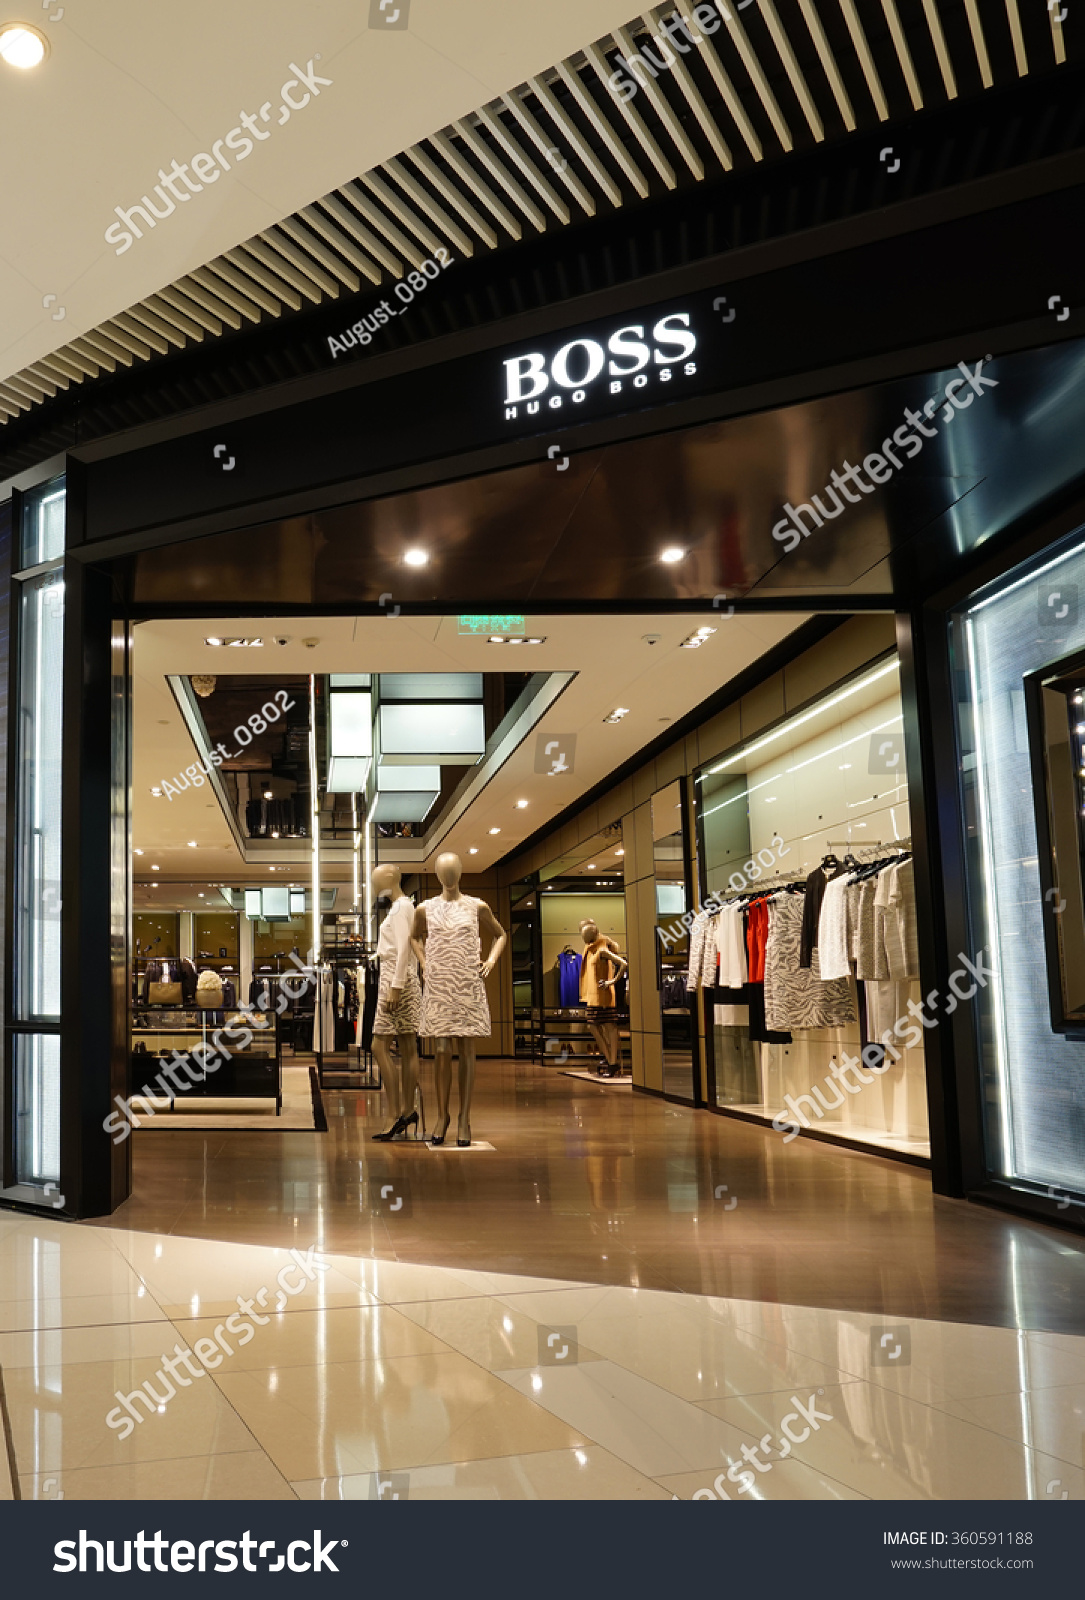 hugo boss retail stores